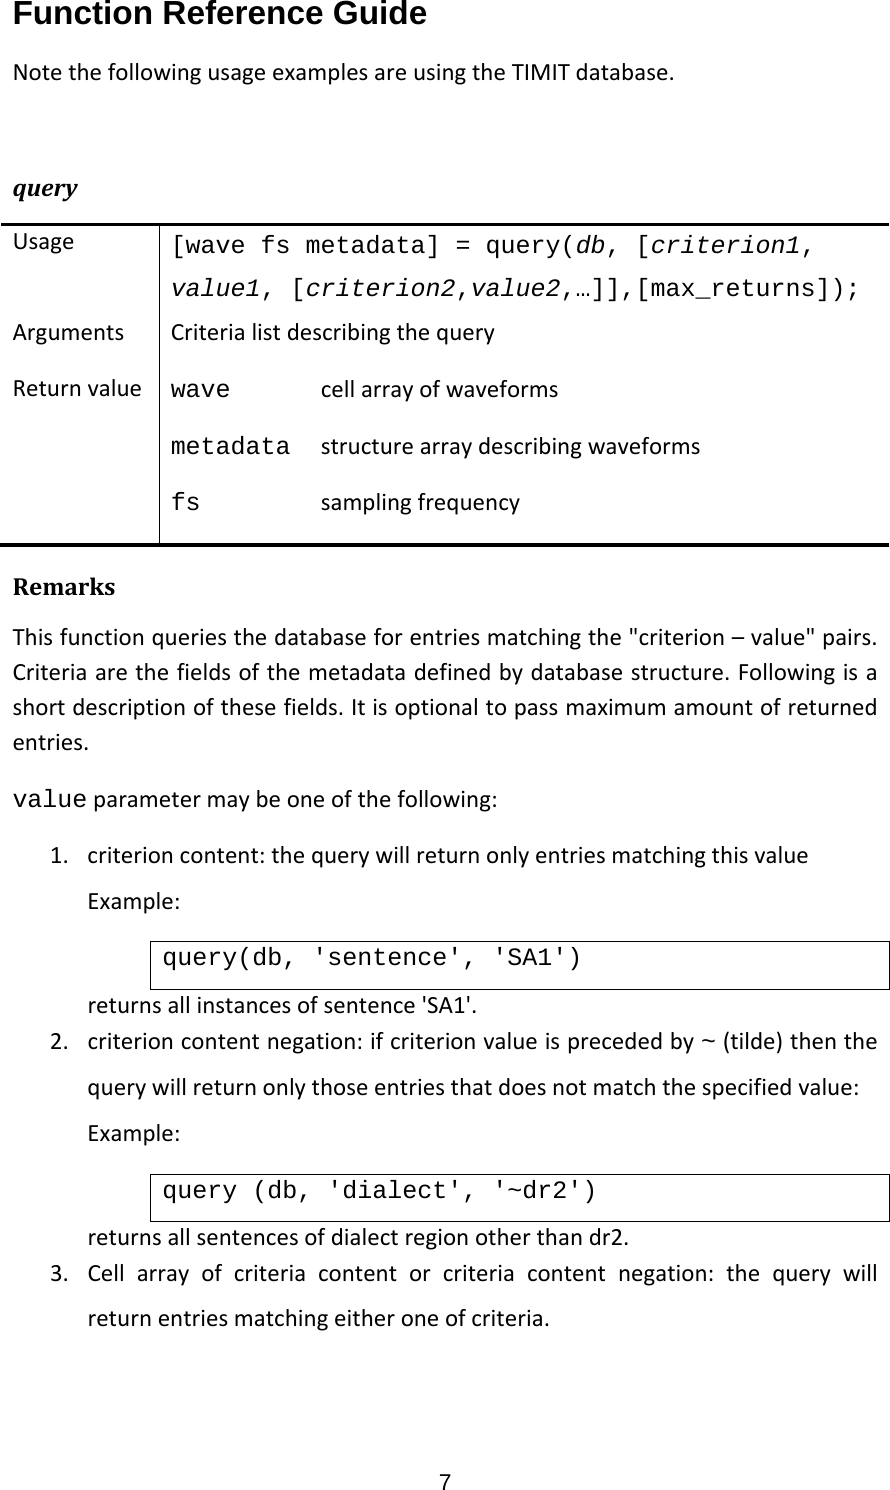 Page 7 of 12 - MATLAB_ADTx Matlab ADT - User Manual